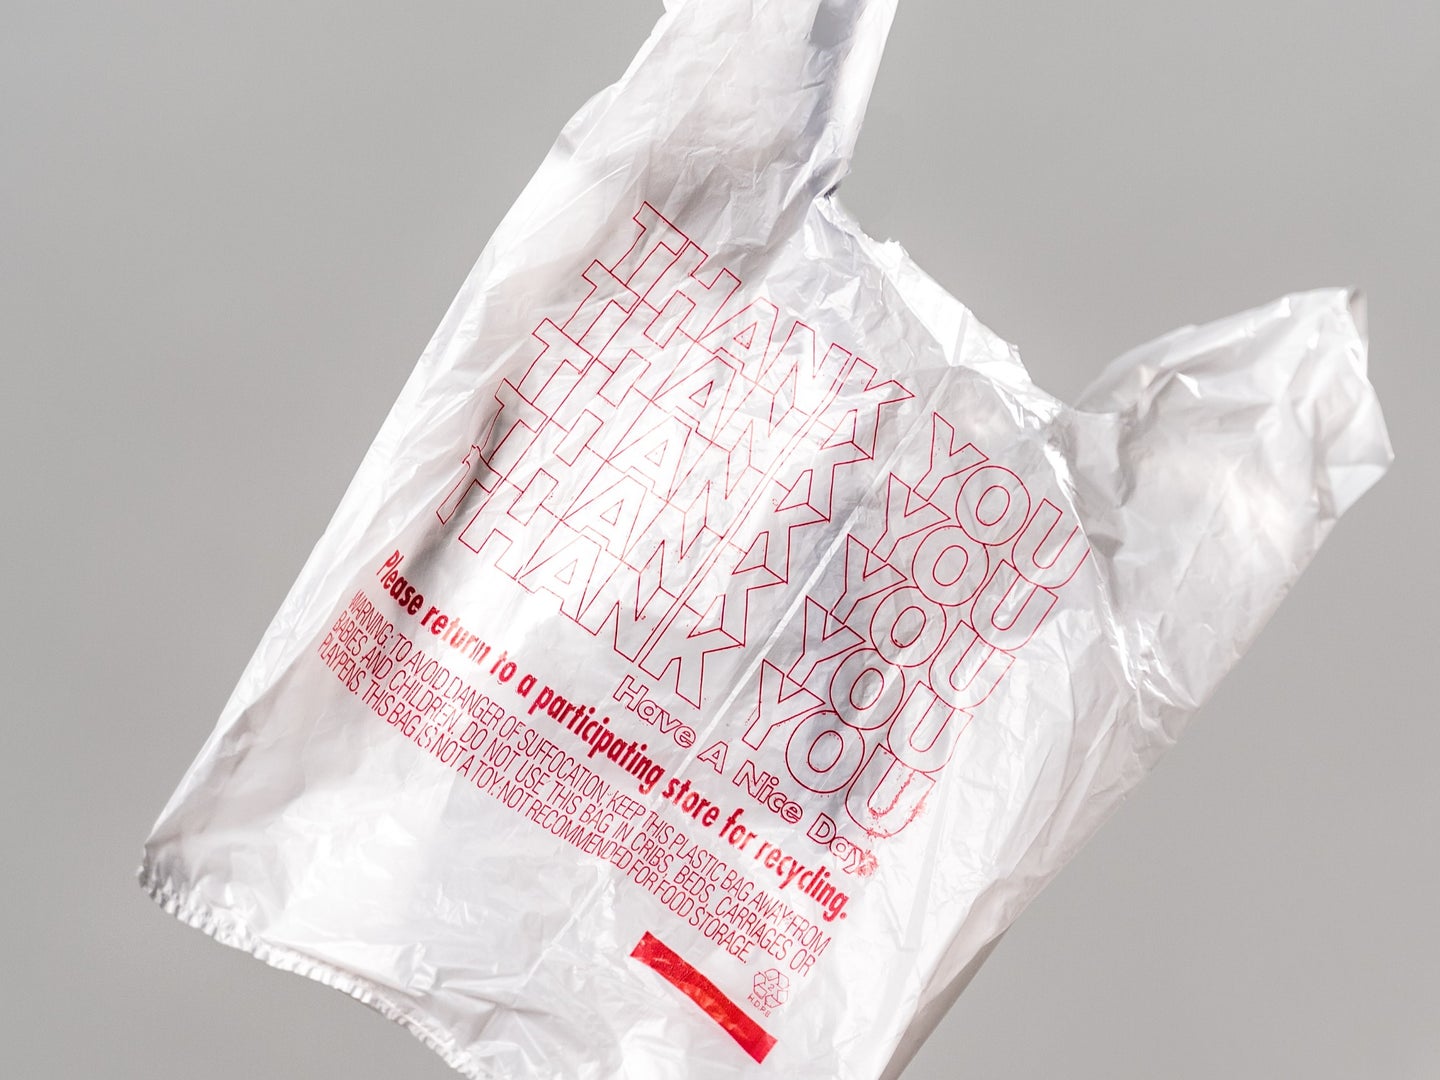 single-use plastic bags